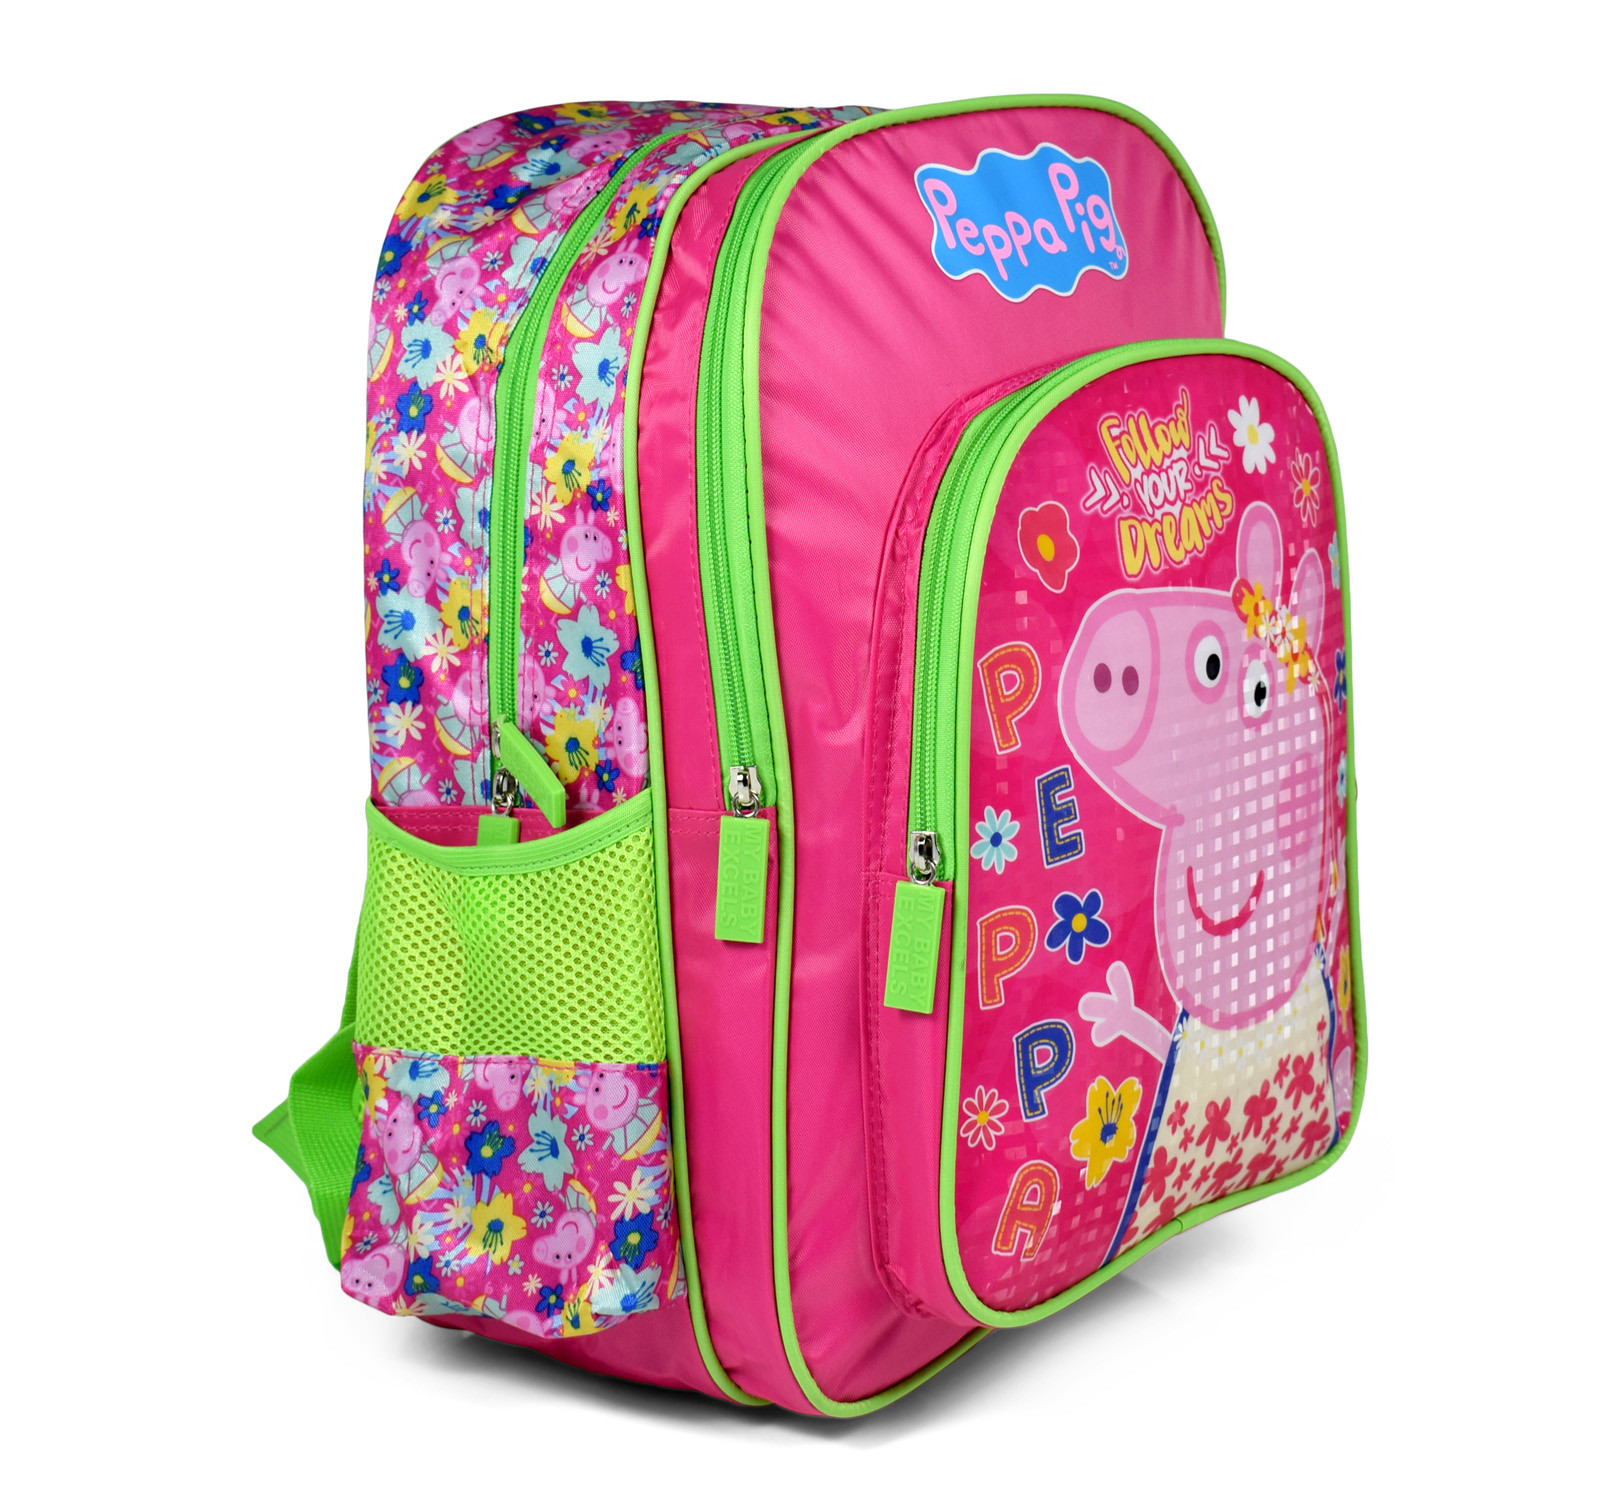 Peppa Pig School Bag Pink - 14 inches